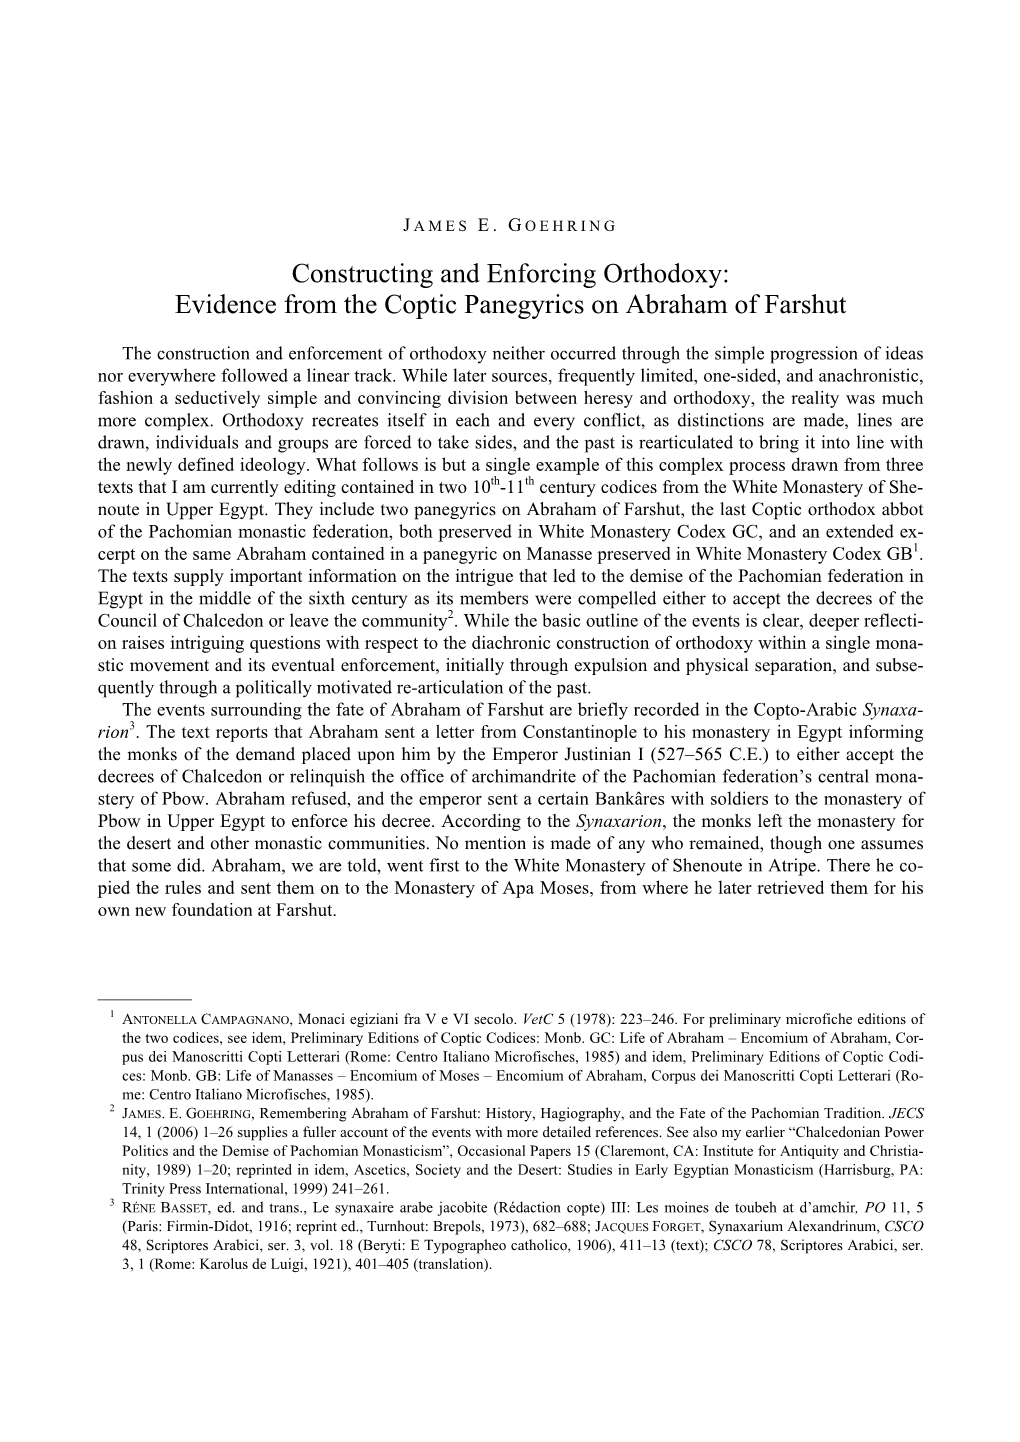 Constructing and Enforcing Orthodoxy: Evidence from the Coptic Panegyrics on Abraham of Farshut